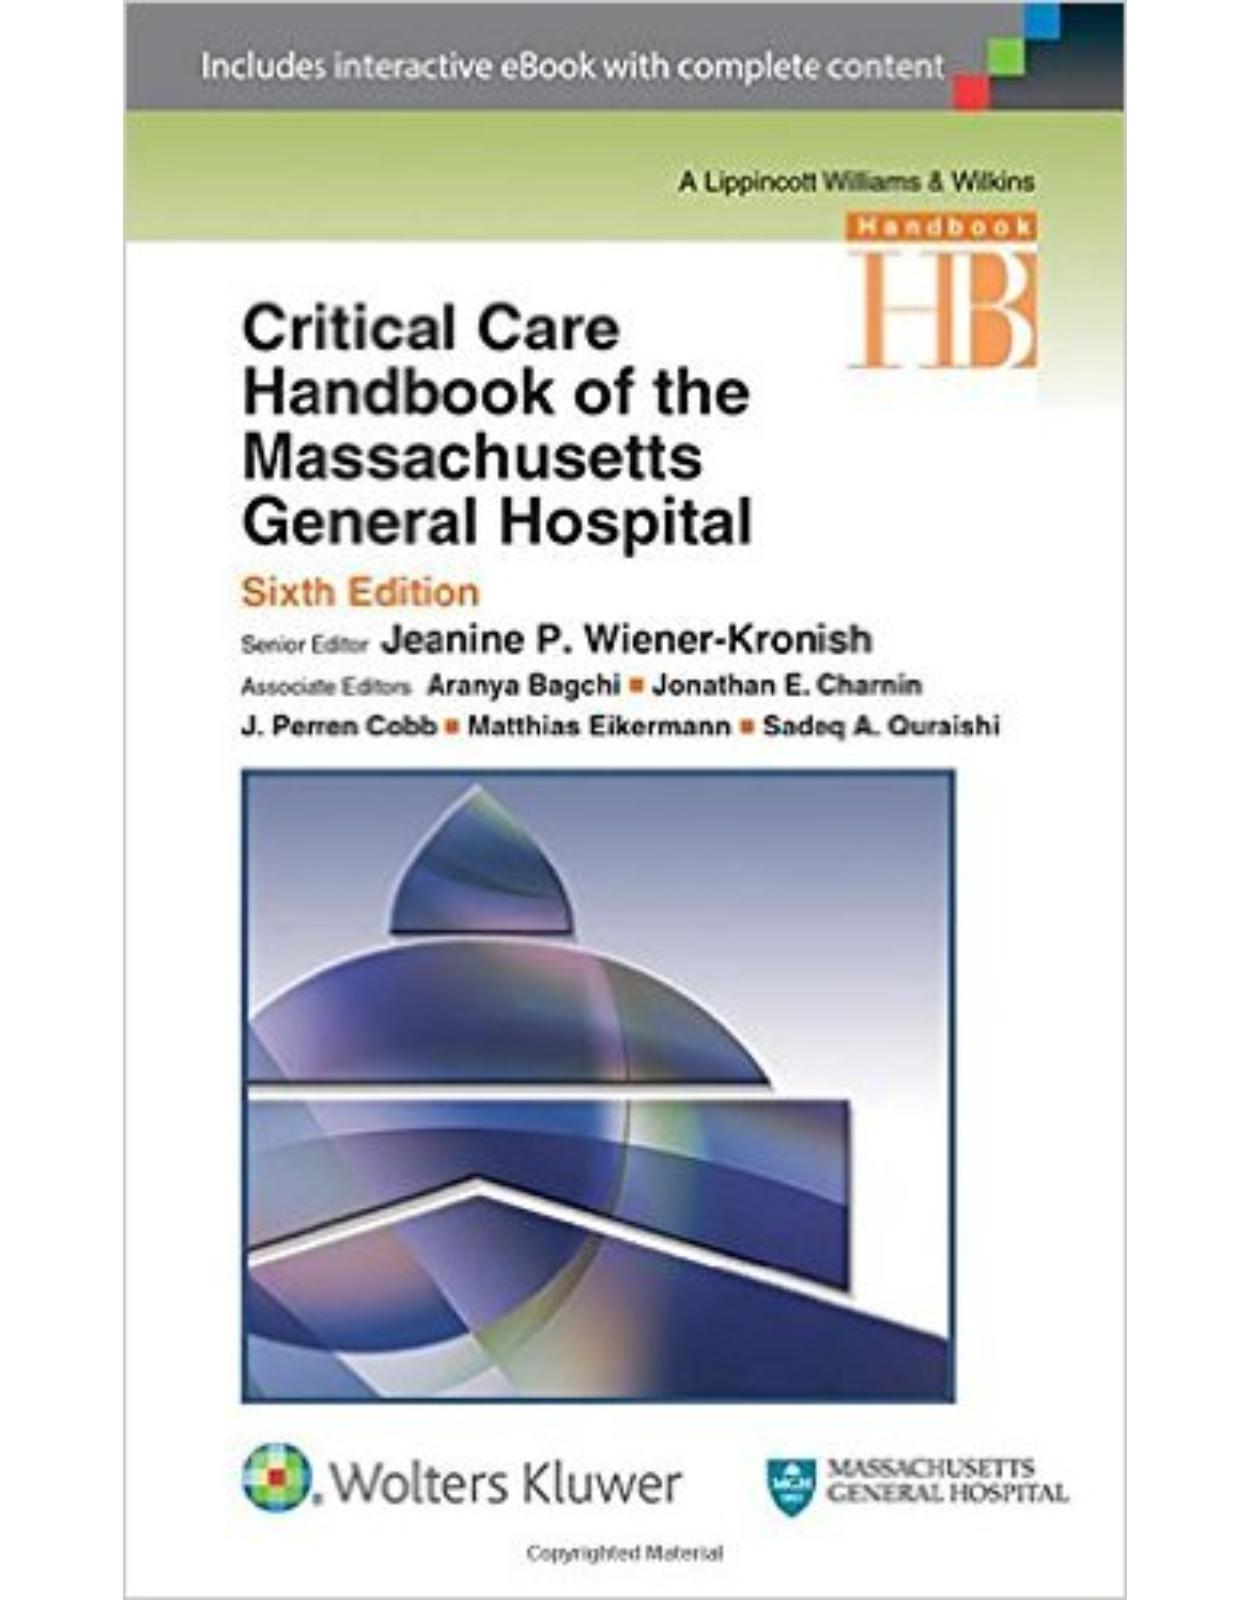 Critical Care Handbook of the Massachusetts General Hospital 